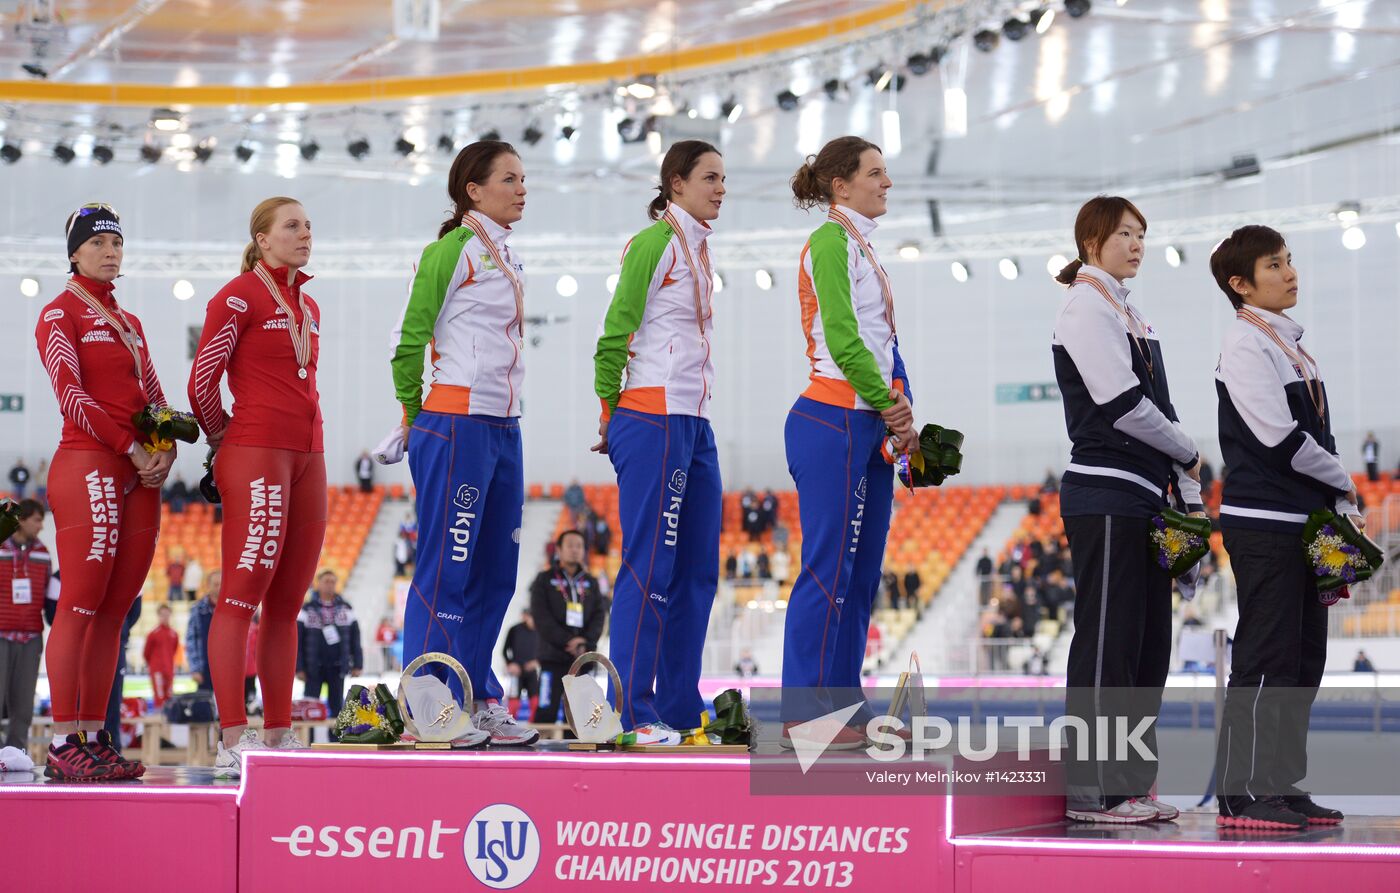 World Speed Skating Championships. Women's team race